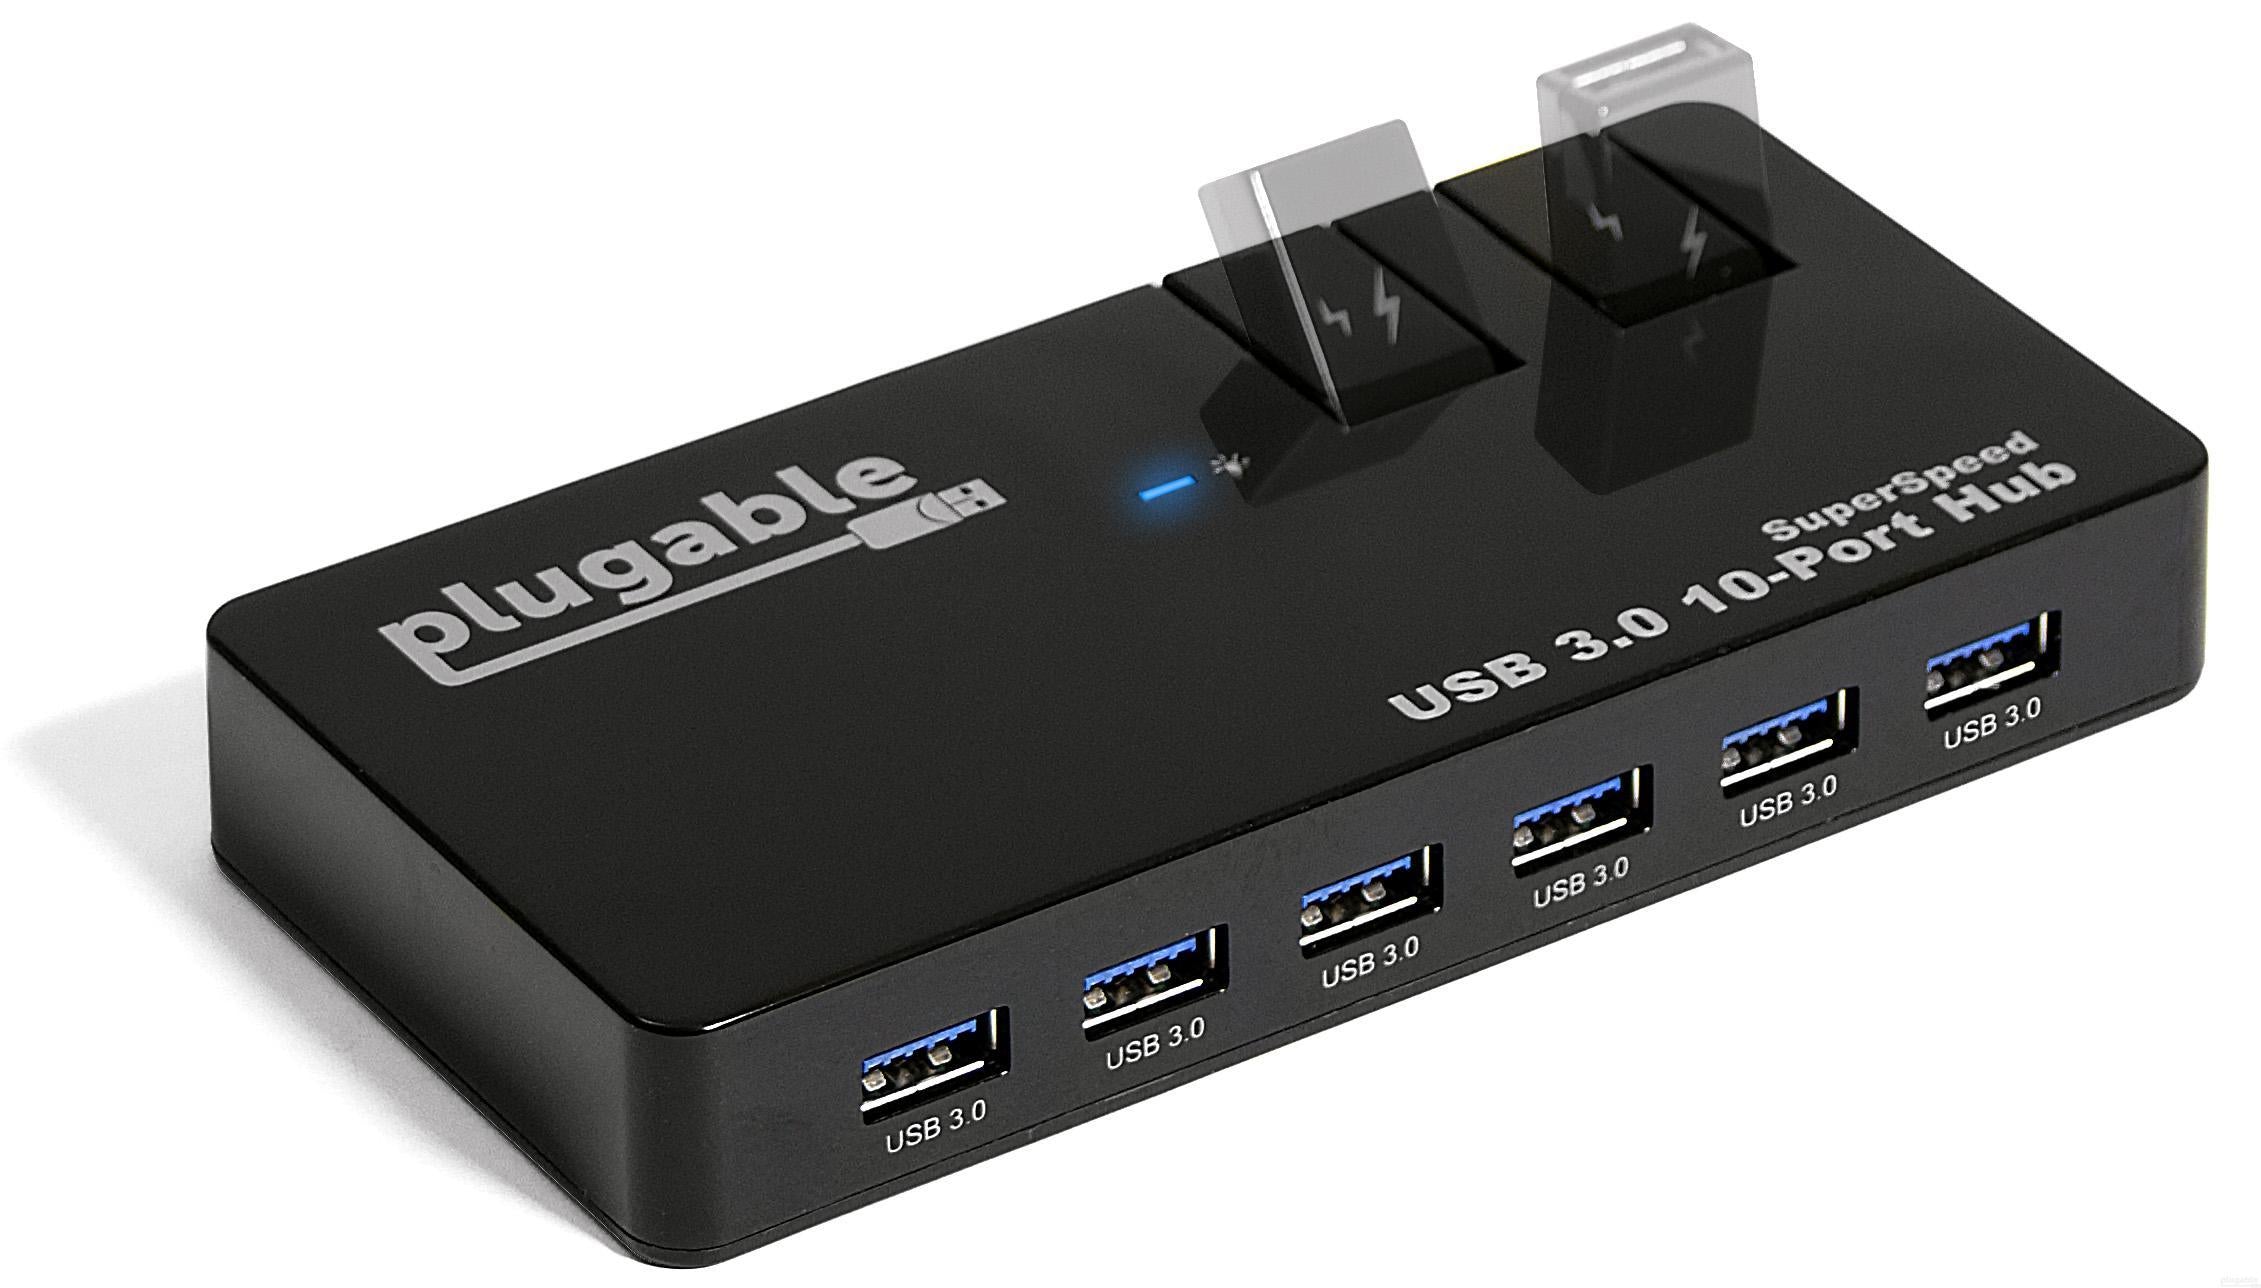 Plugable USB 3.0 10-Port Hub with Power Adapter – Technologies